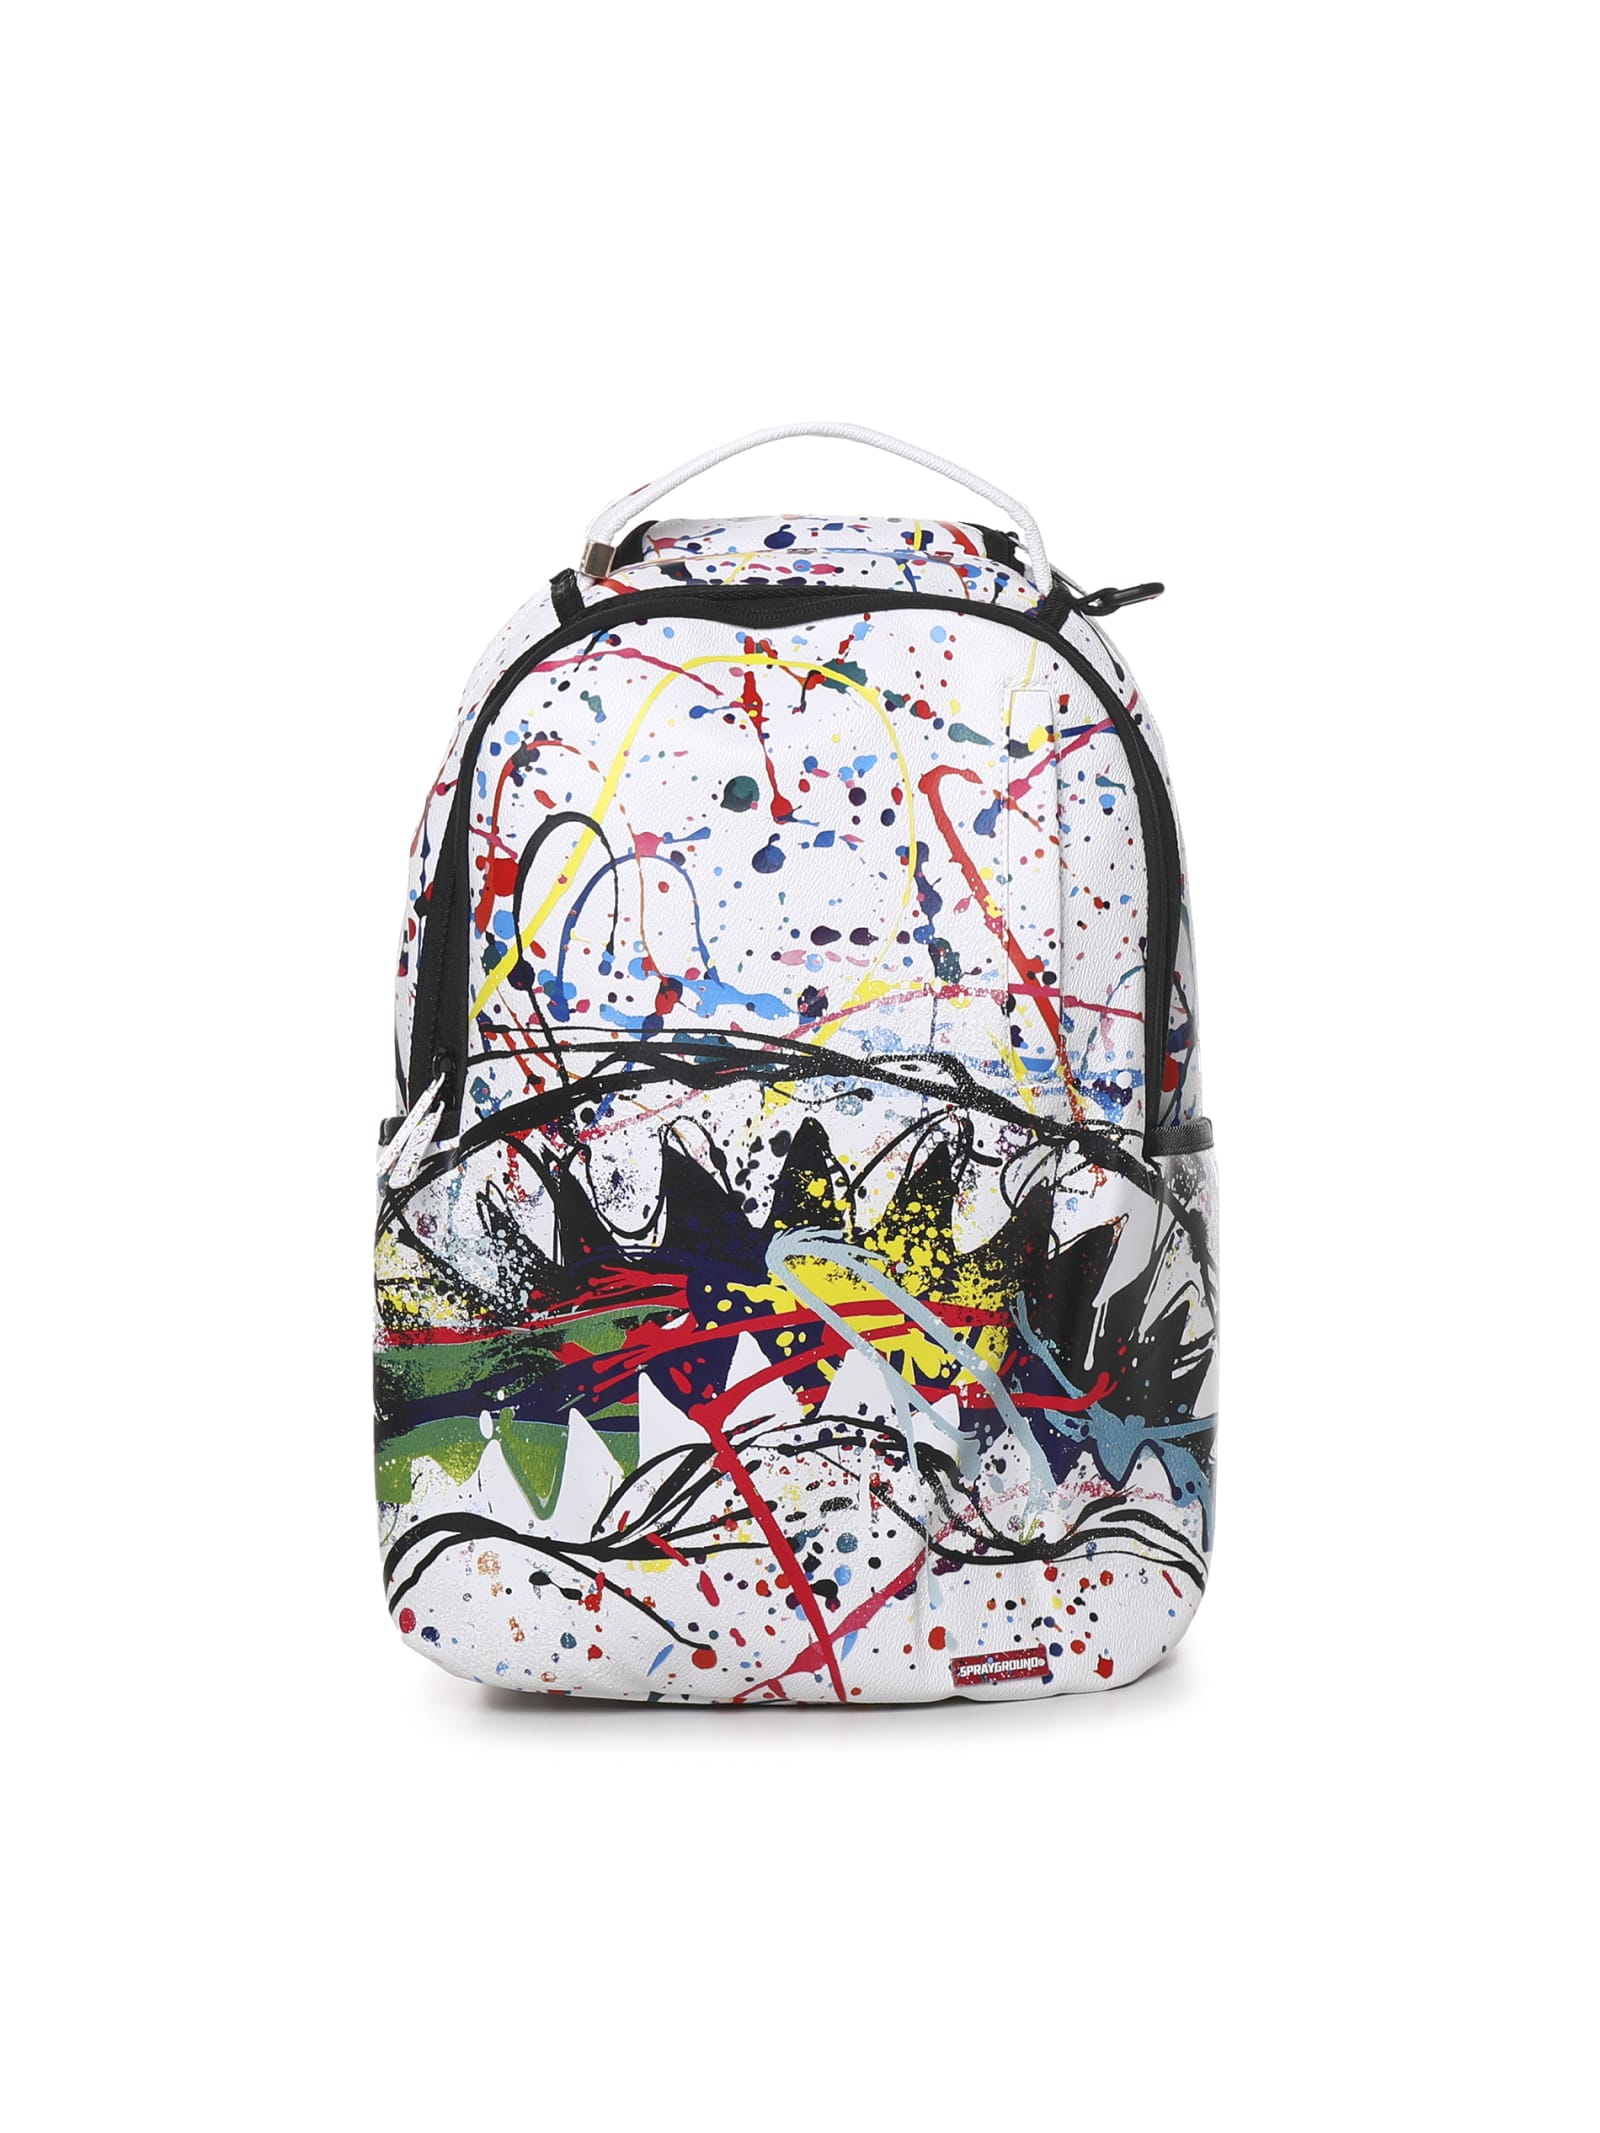 Sprayground - Early Dazed Backpack | Clique Apparel